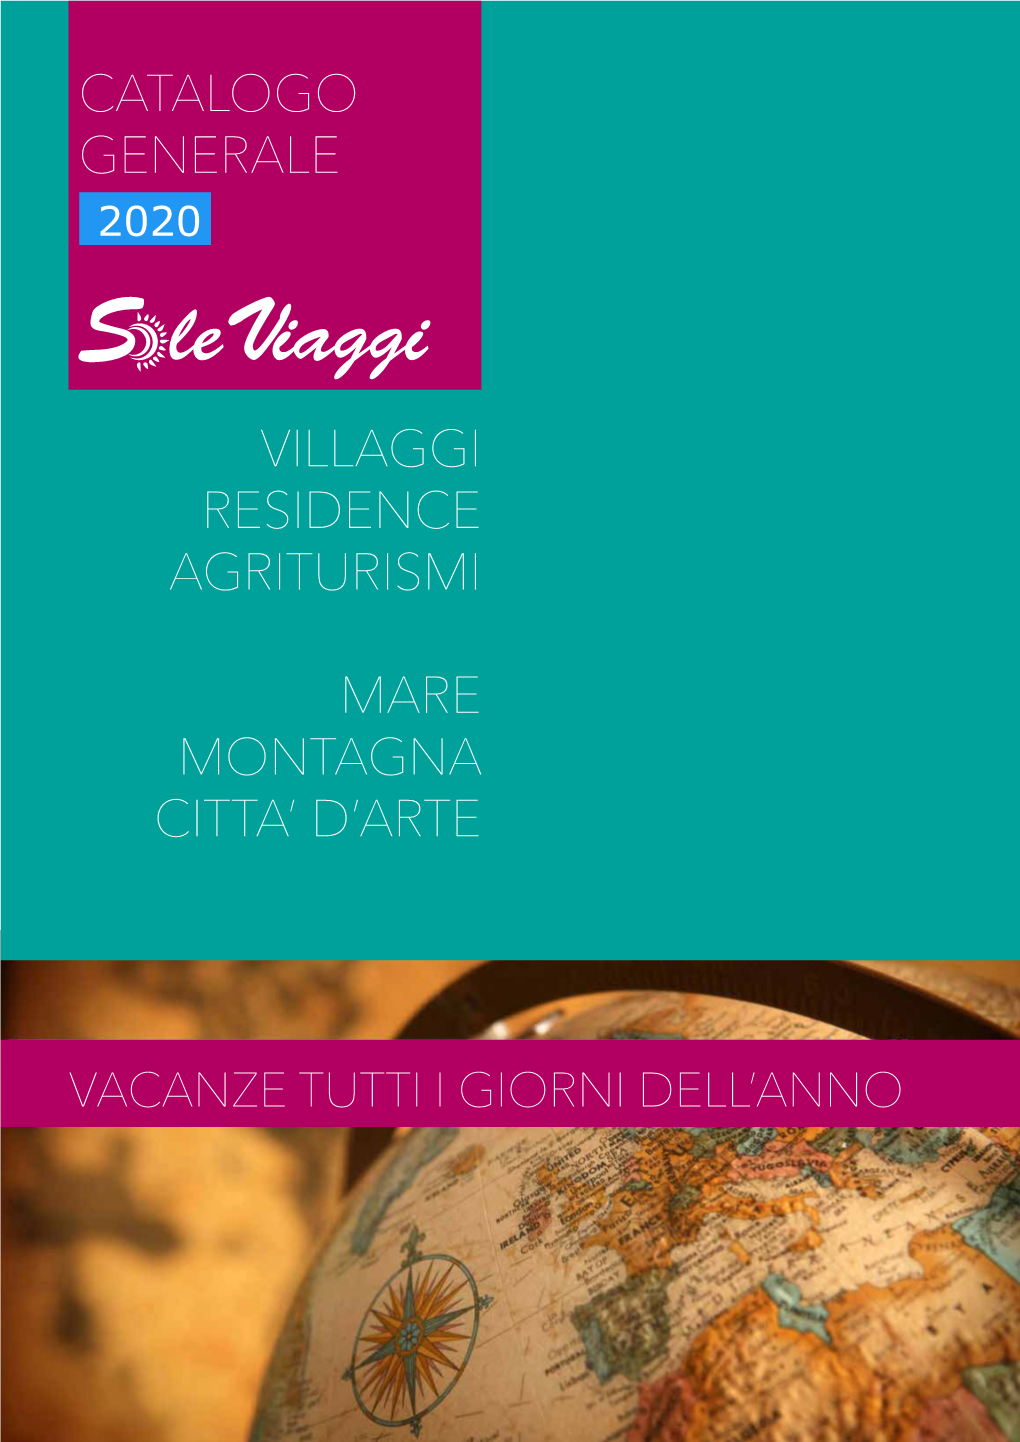 Catalogo Generale 2019 Villaggi Residence Agriturismi Mare Montagna Citta' D'arte